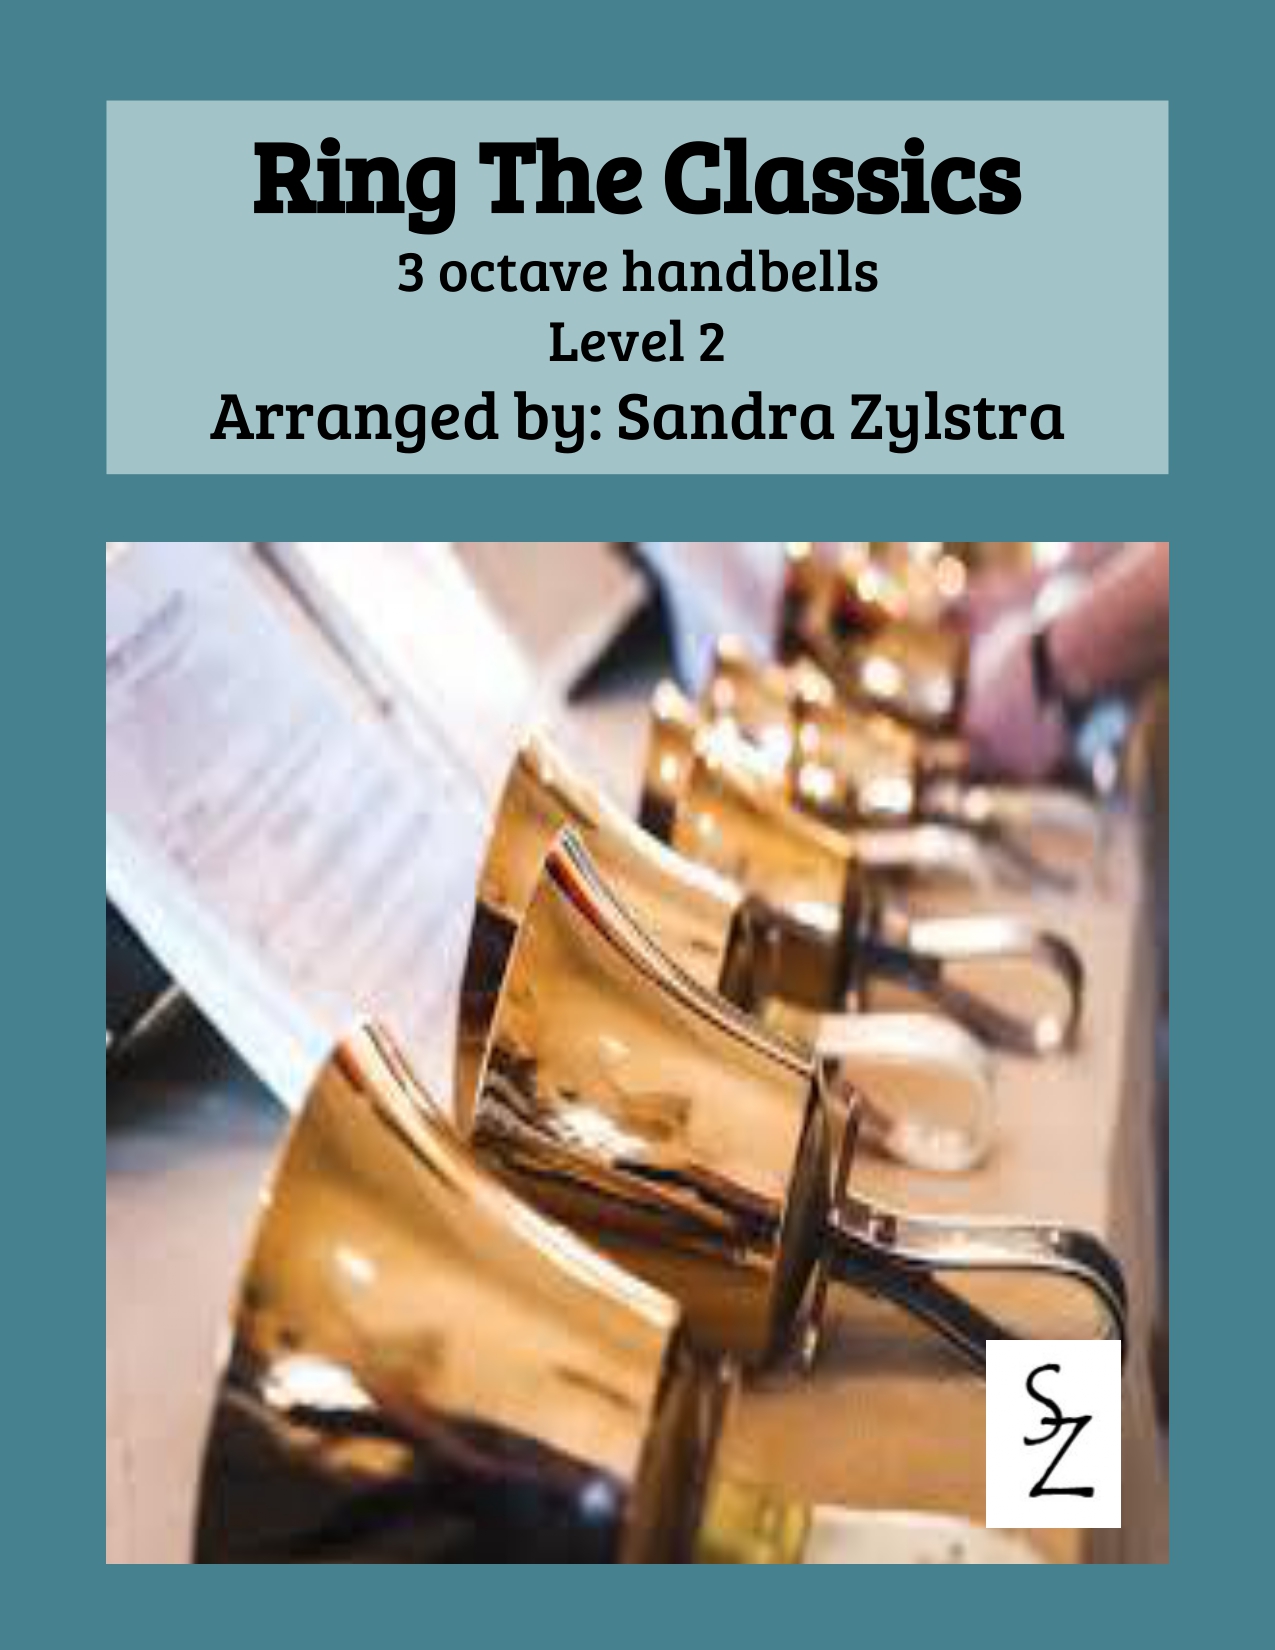 Ring The Classics 3 octave handbells book page 00011